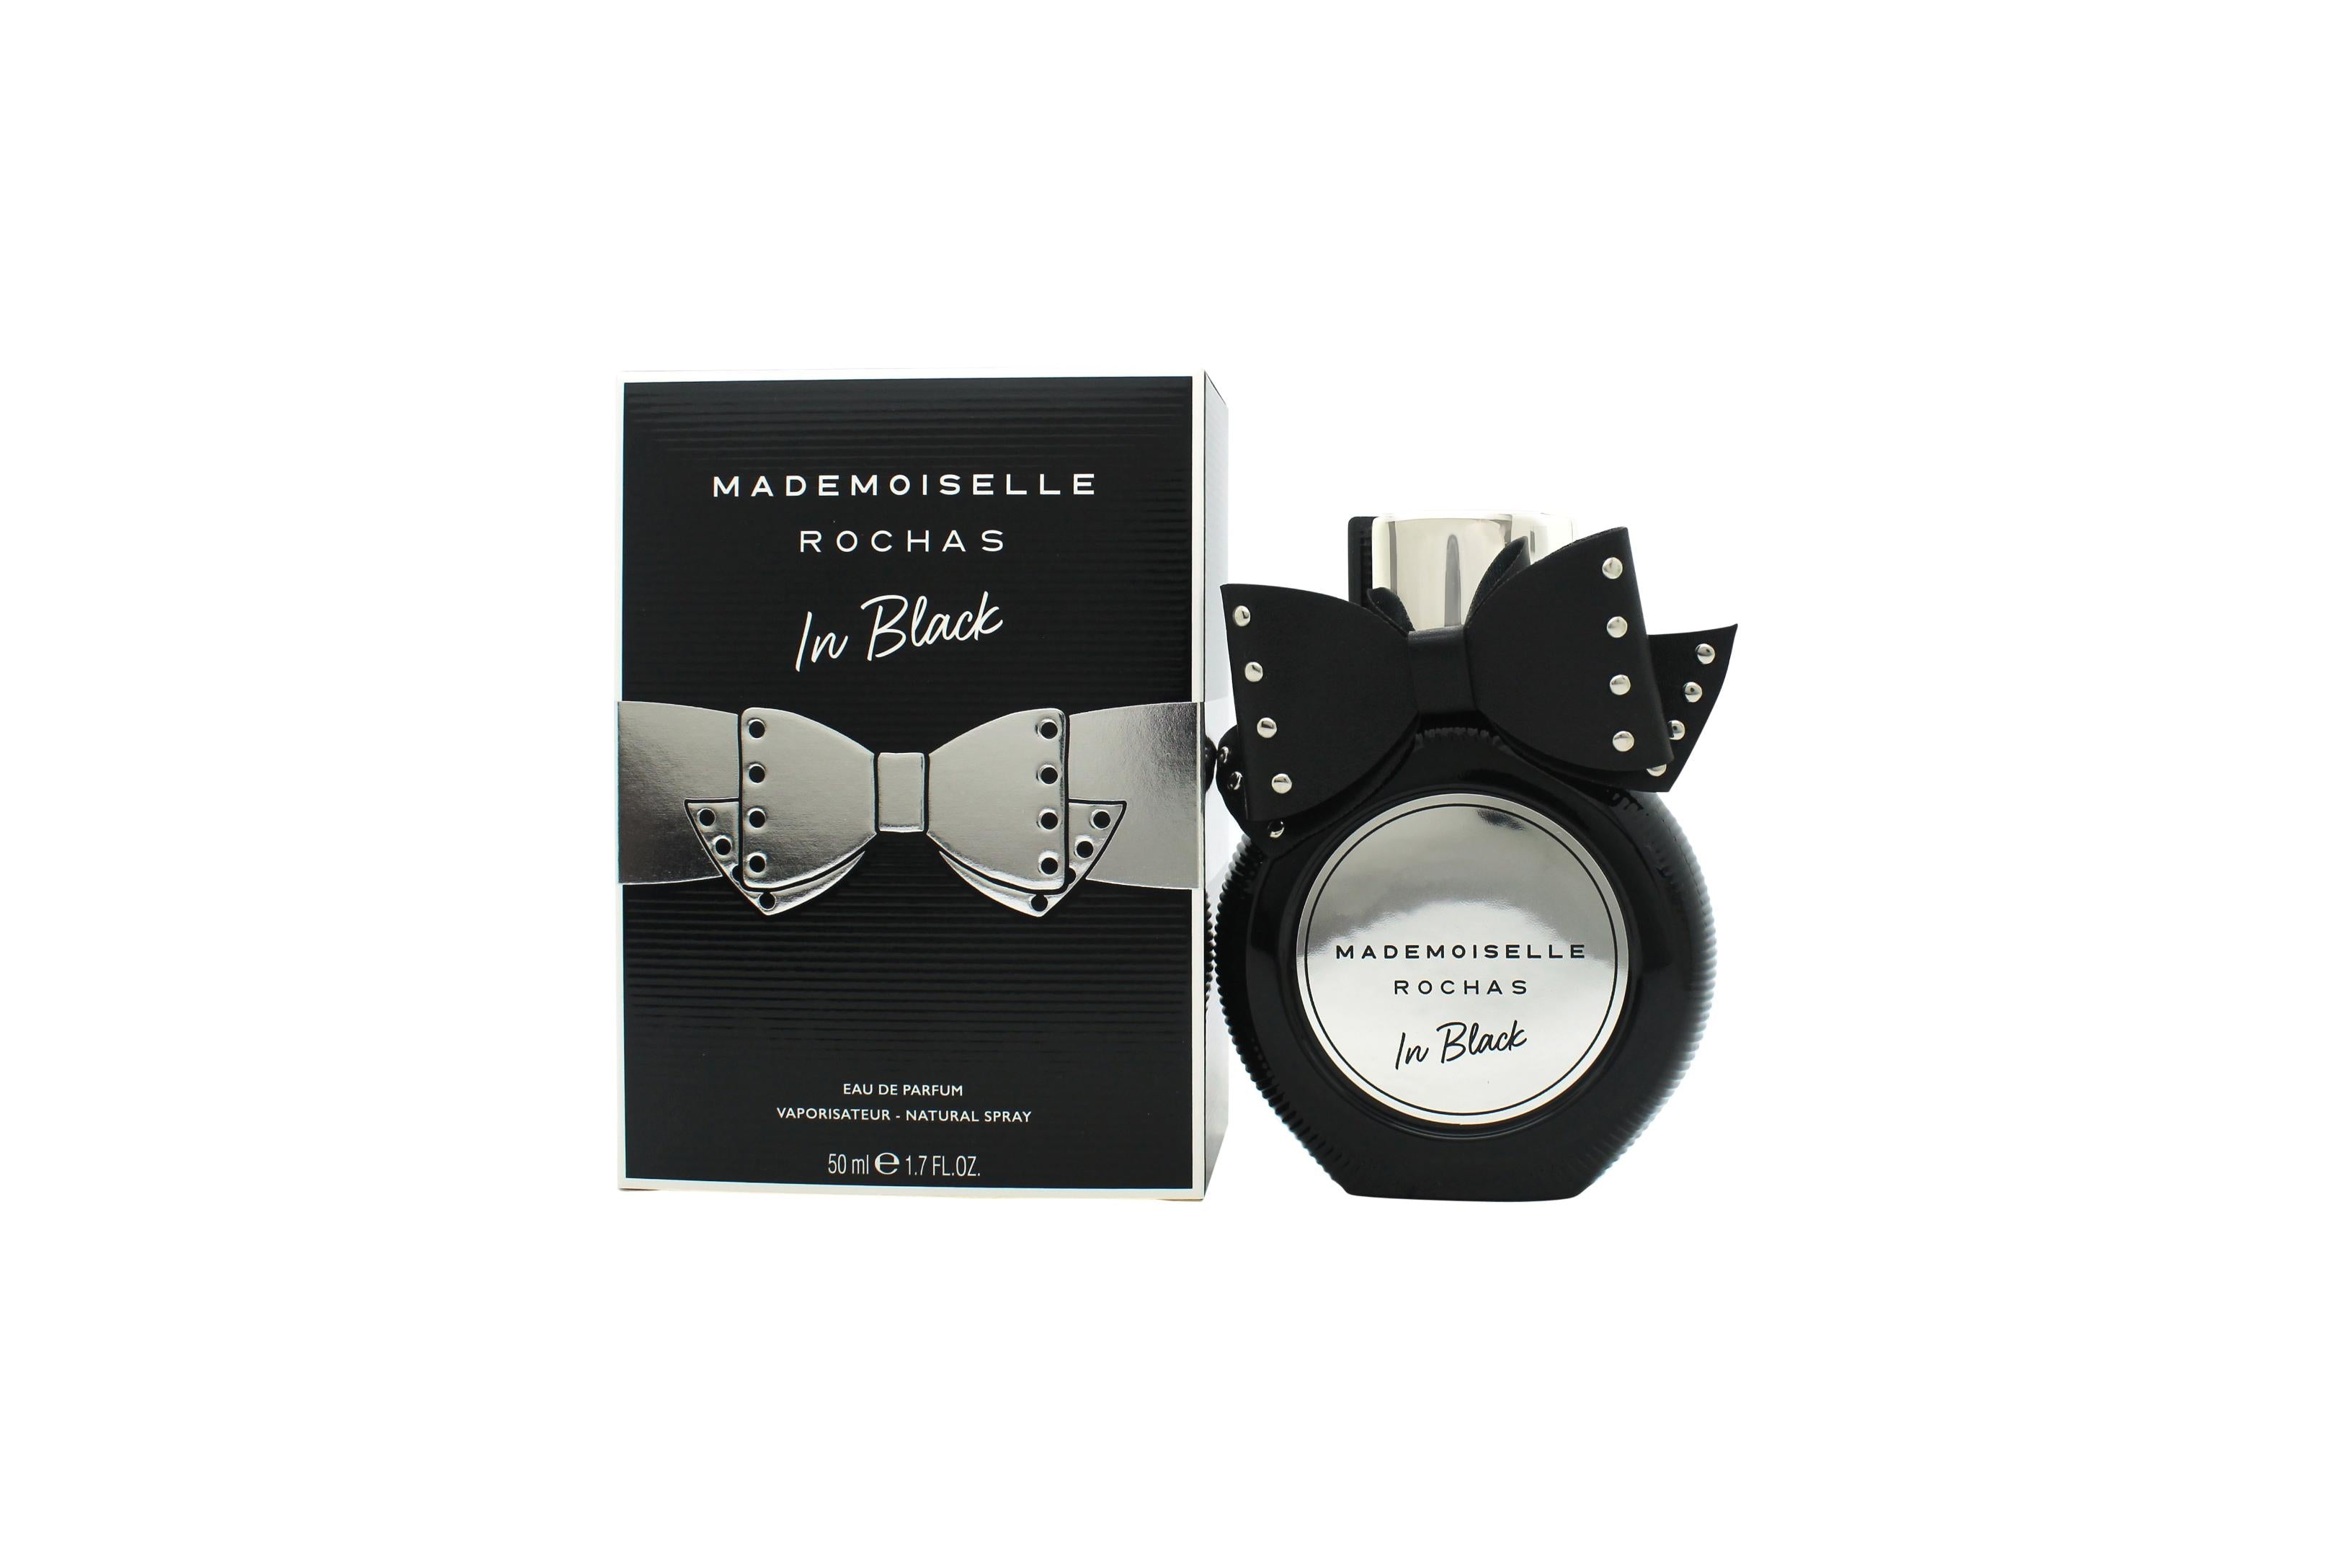 View Rochas Mademoiselle In Black Eau de Parfum 50ml Spray information